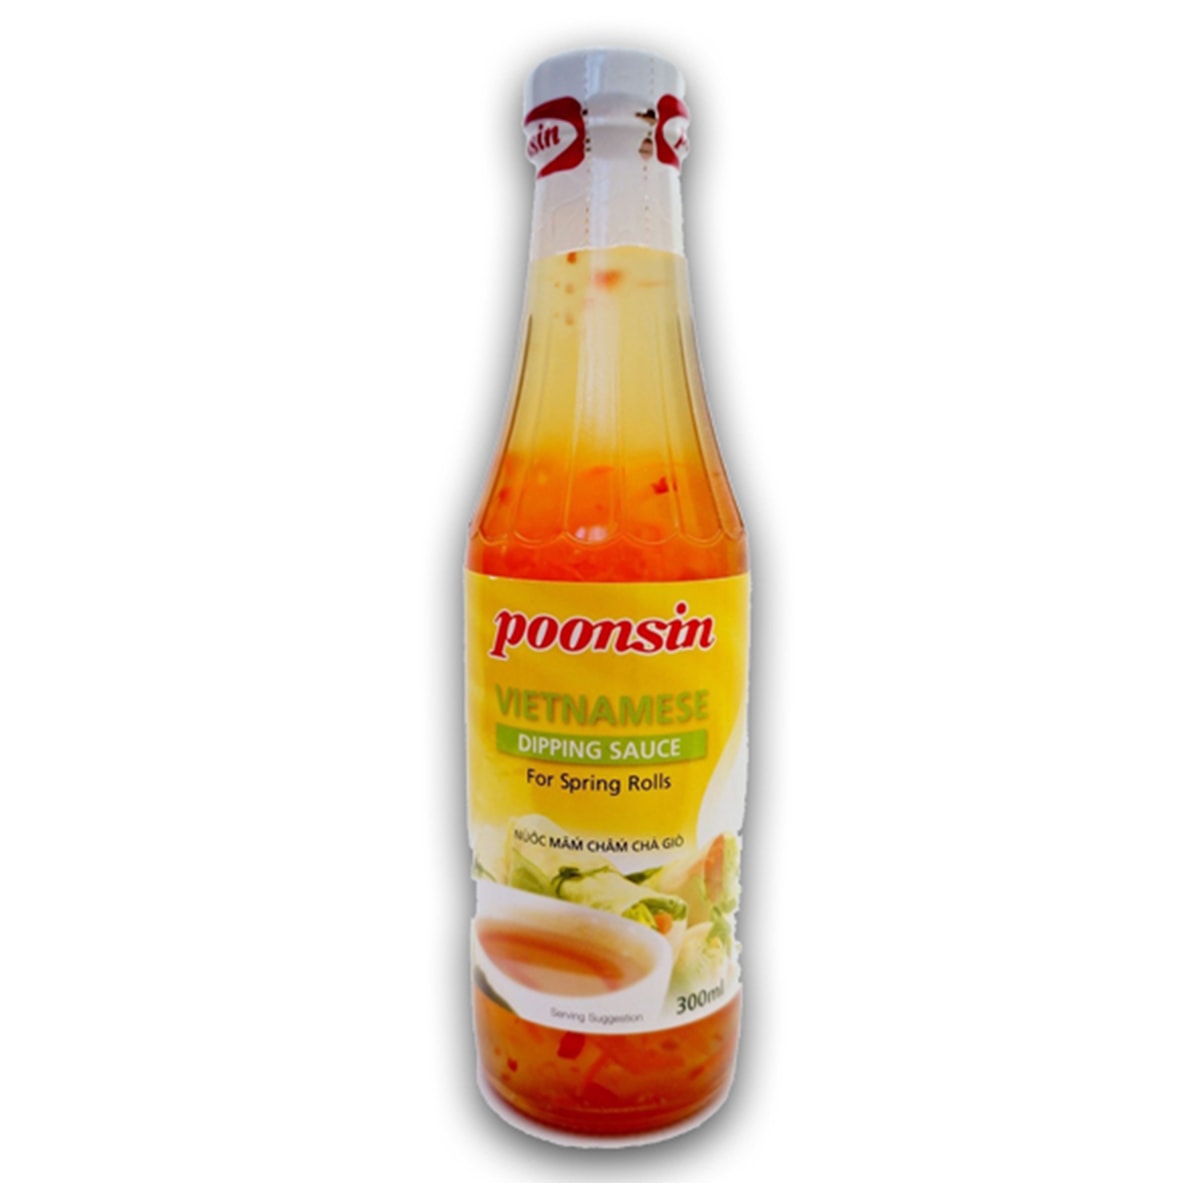 Buy Poonsin Vietnamese Dipping Sauce for Spring Roll - 300 ml